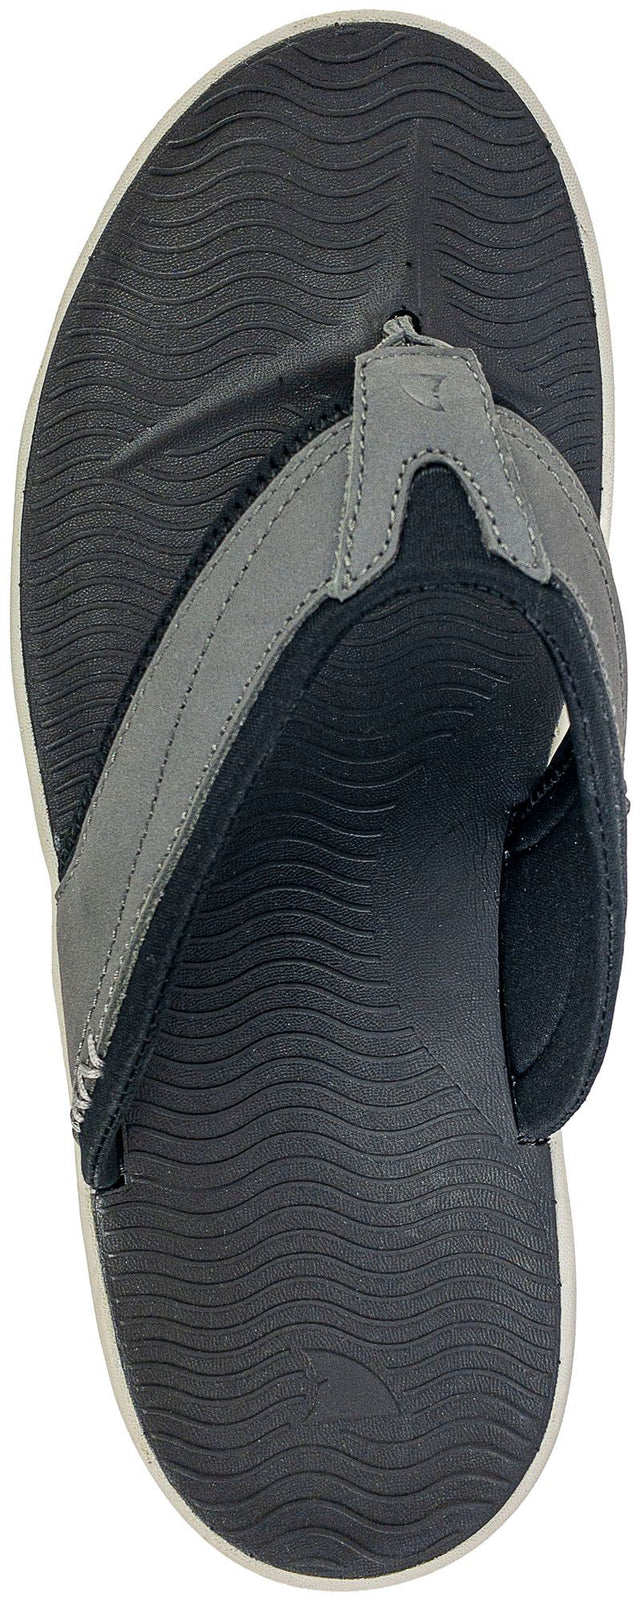 Men's Kariba Leather Boat Sandal